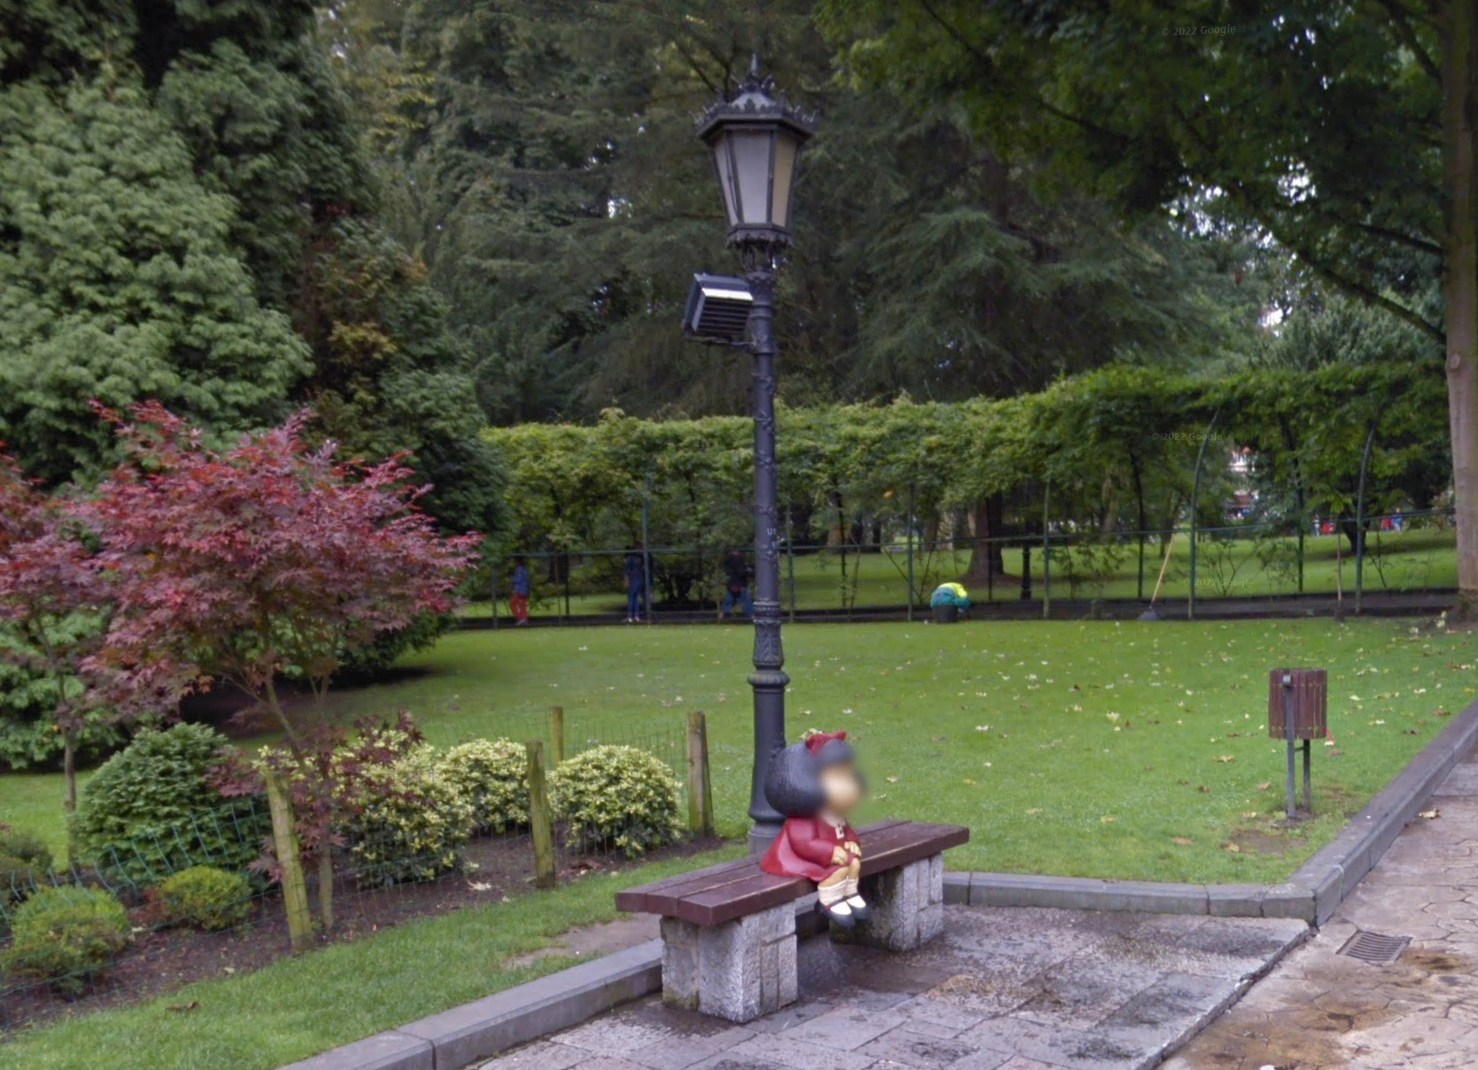 Estatua de Mafalda by Google Earth